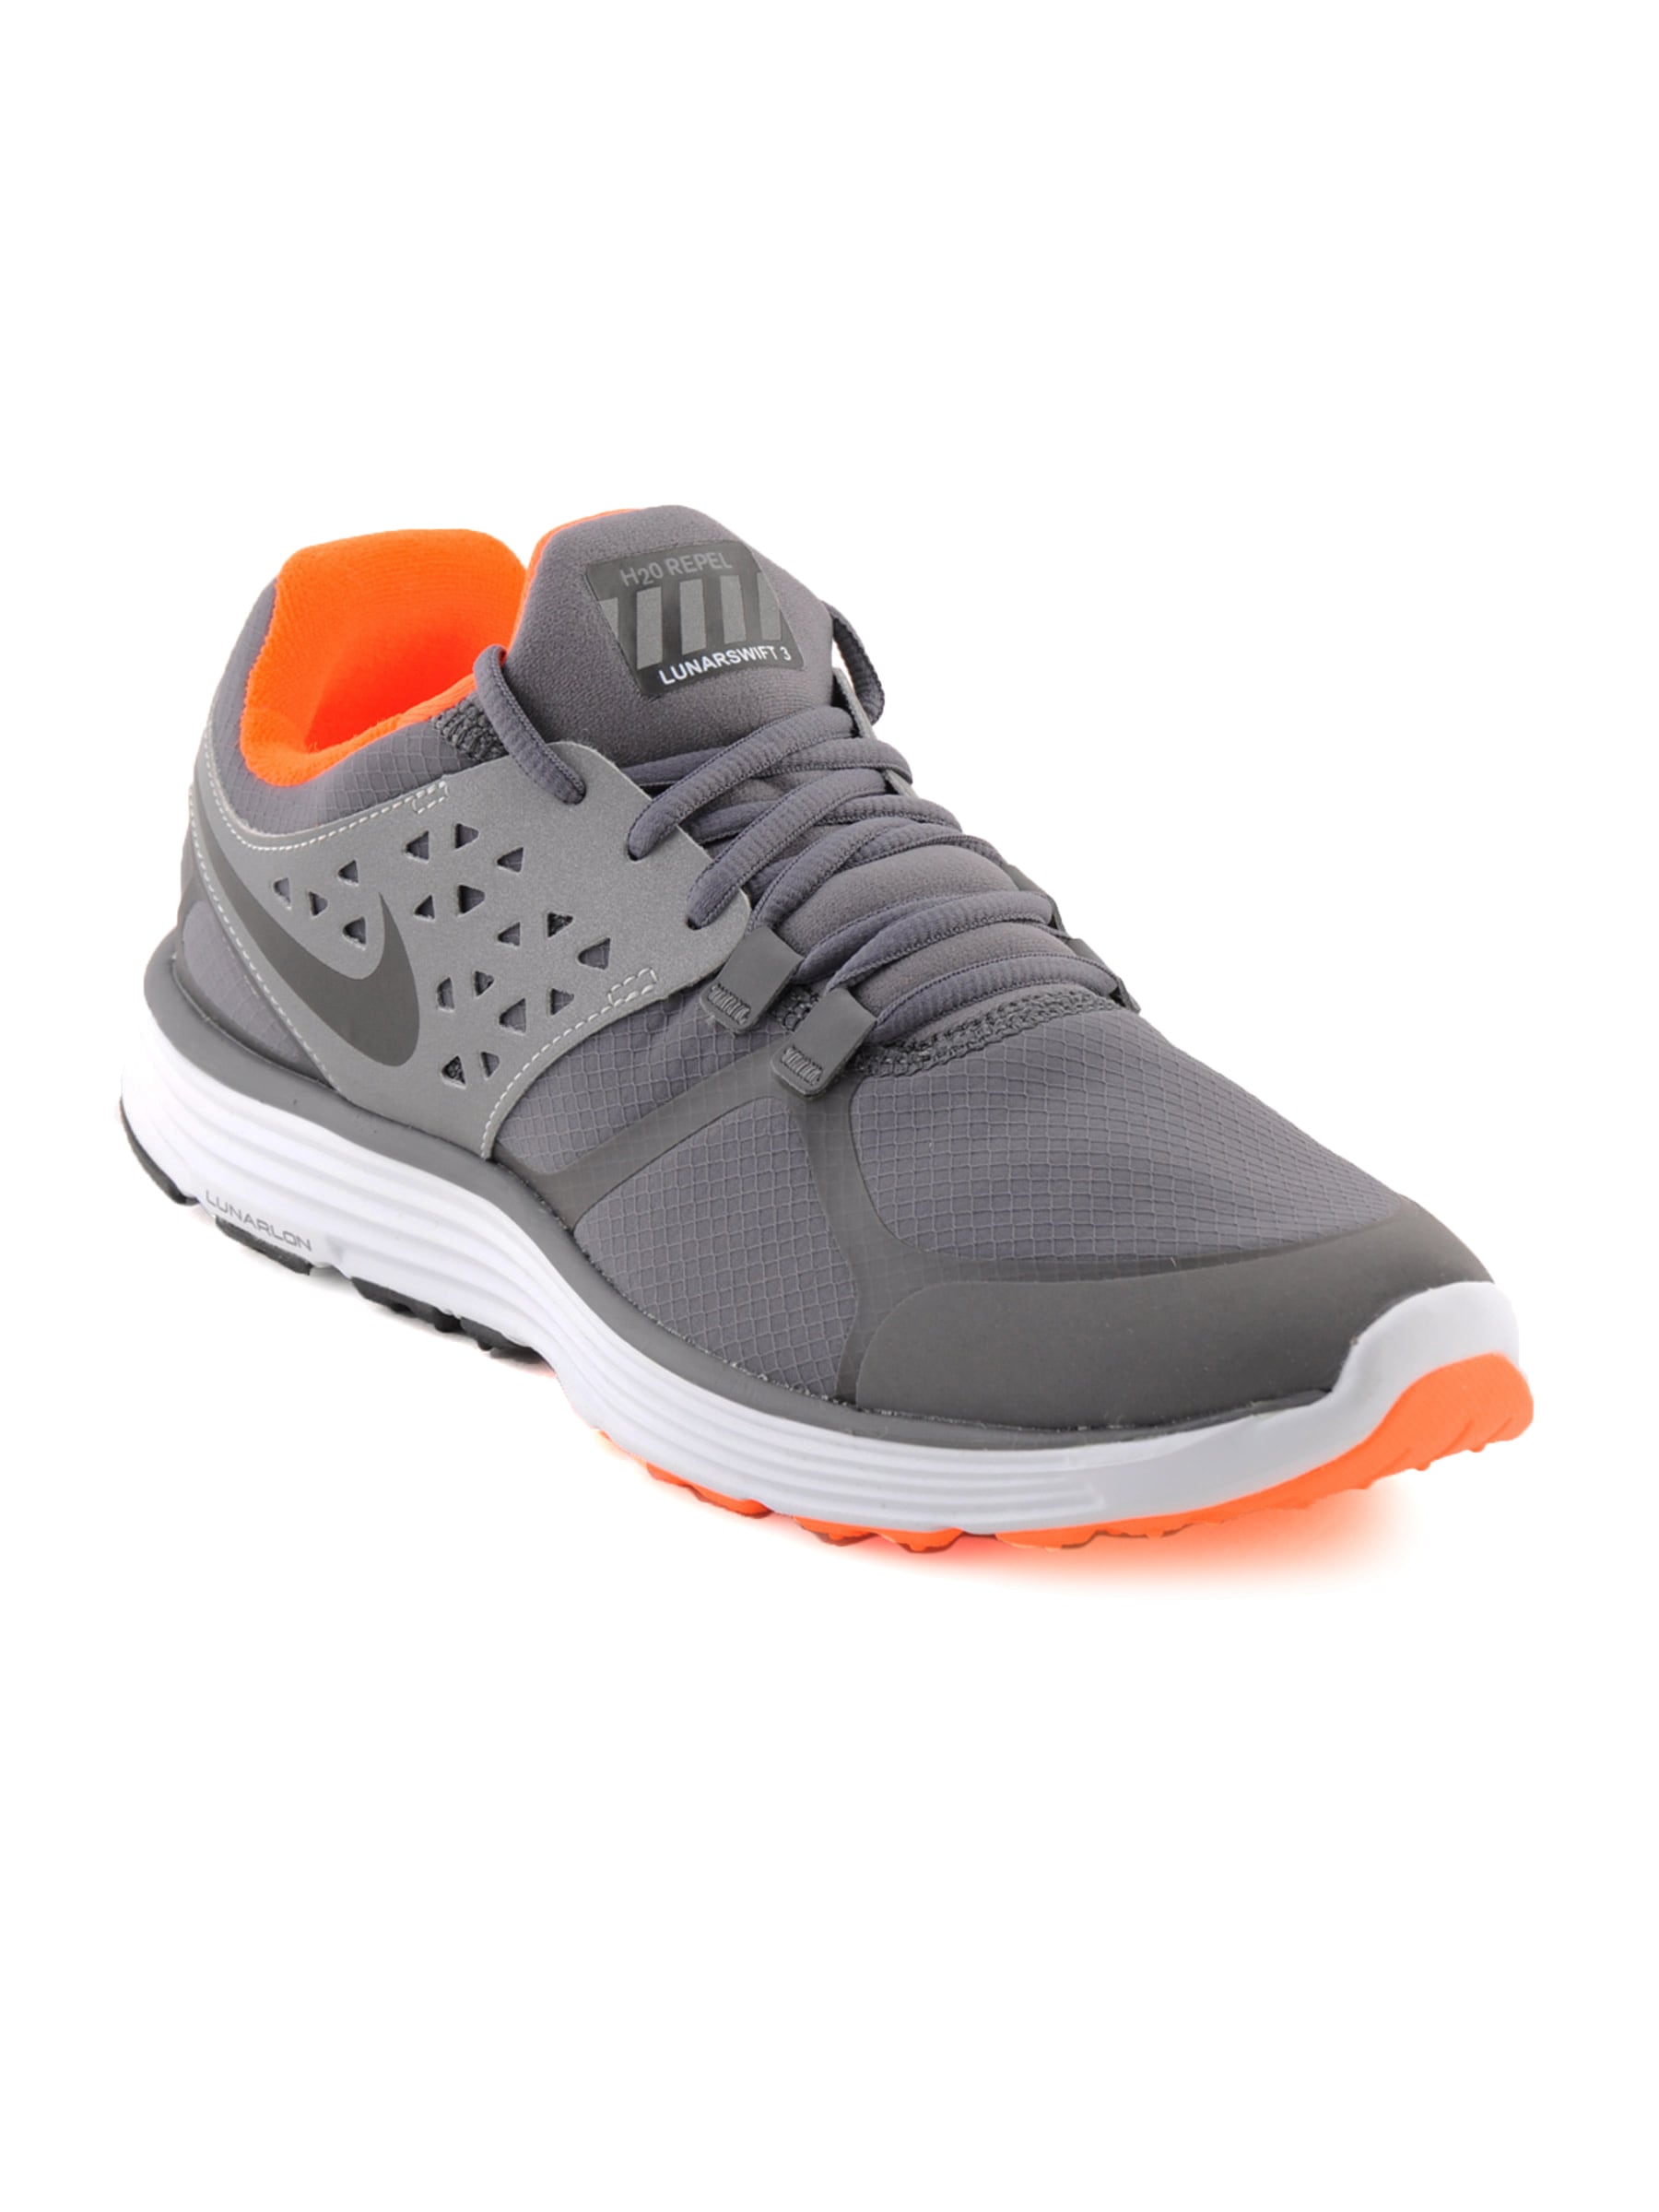 Nike Men Lunarswift+ 3 Shield Grey Sports Shoes